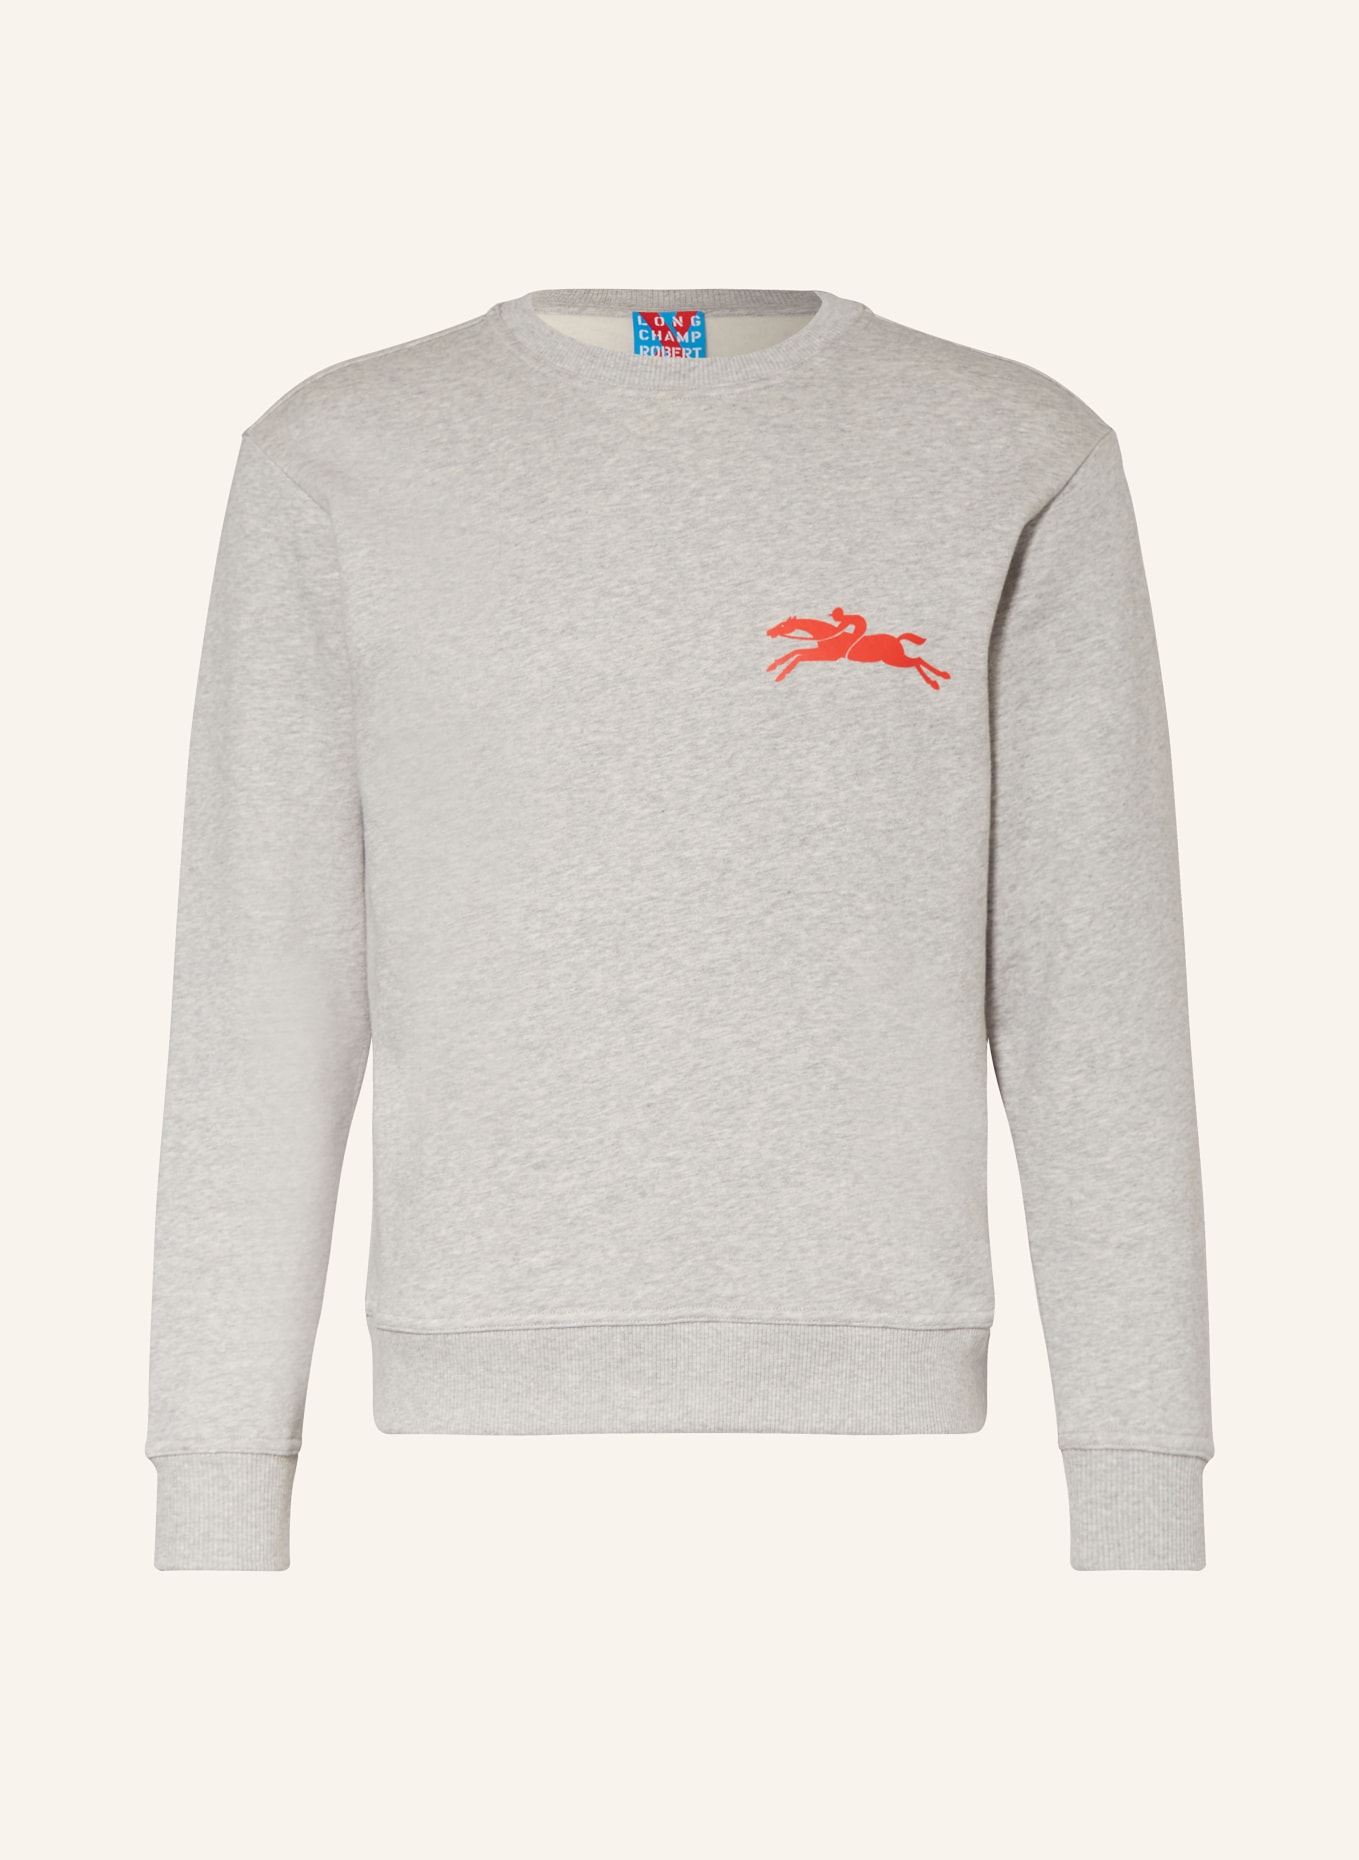 LONGCHAMP Sweatshirt, Farbe: GRAU/ ROT (Bild 1)